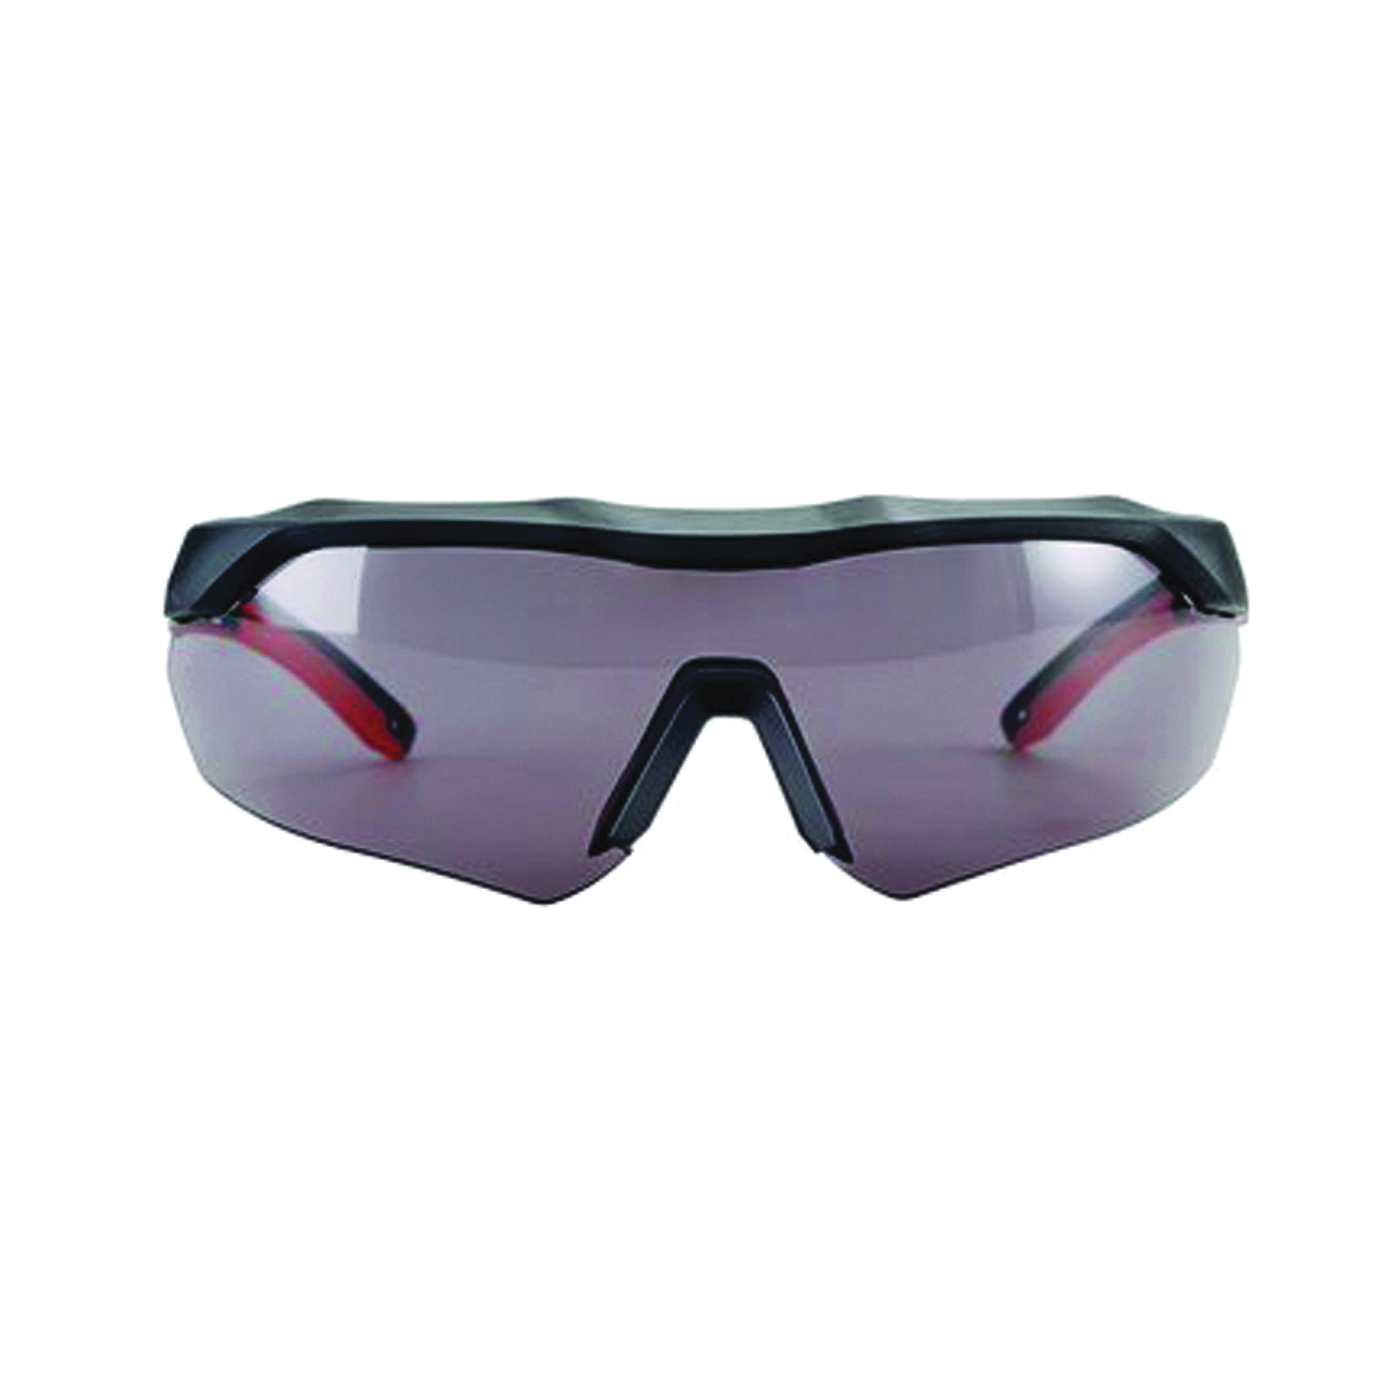 47091-WZ4 Safety Glasses, Anti-Fog, Anti-Scratch Lens, Wraparound Frame, Black/Red Frame